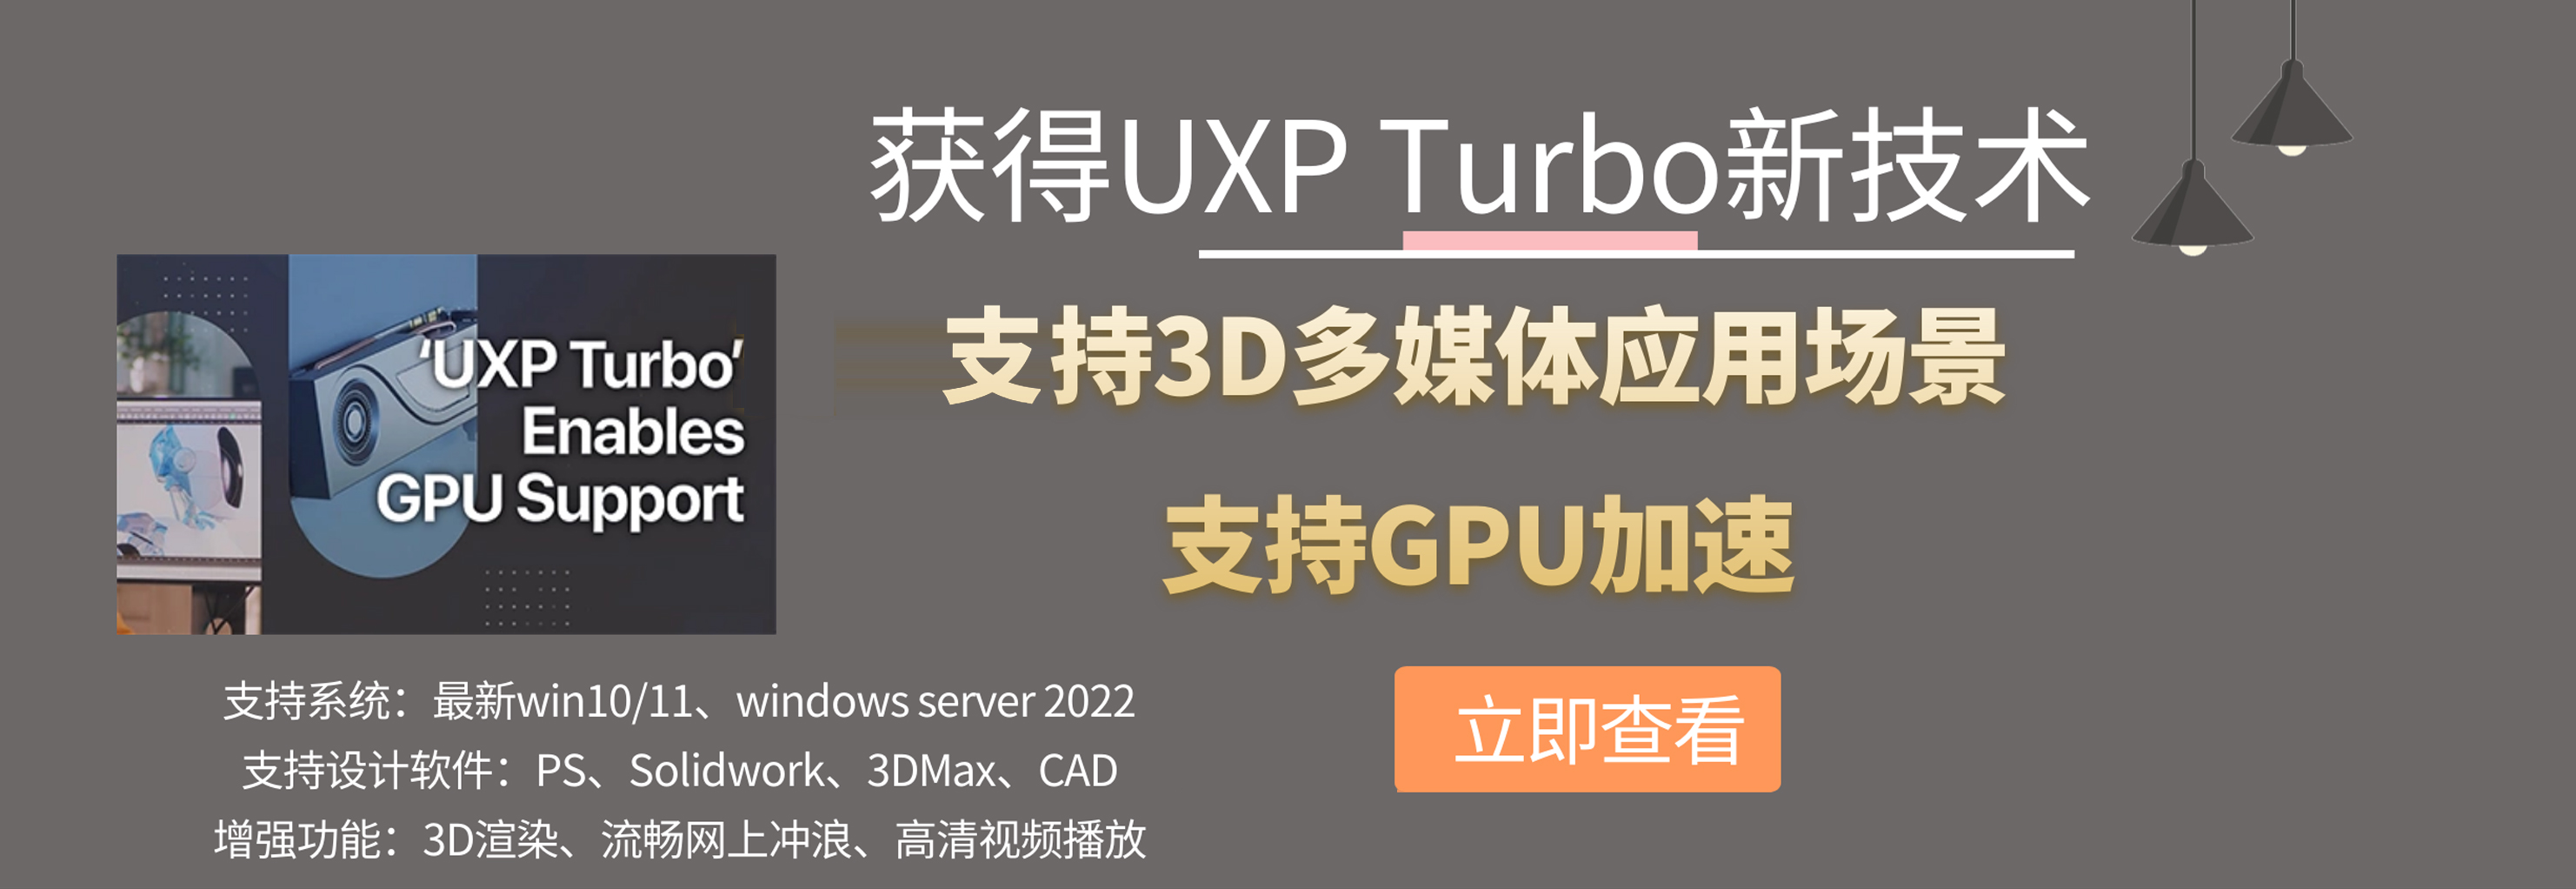 UXP-TURBO-202204